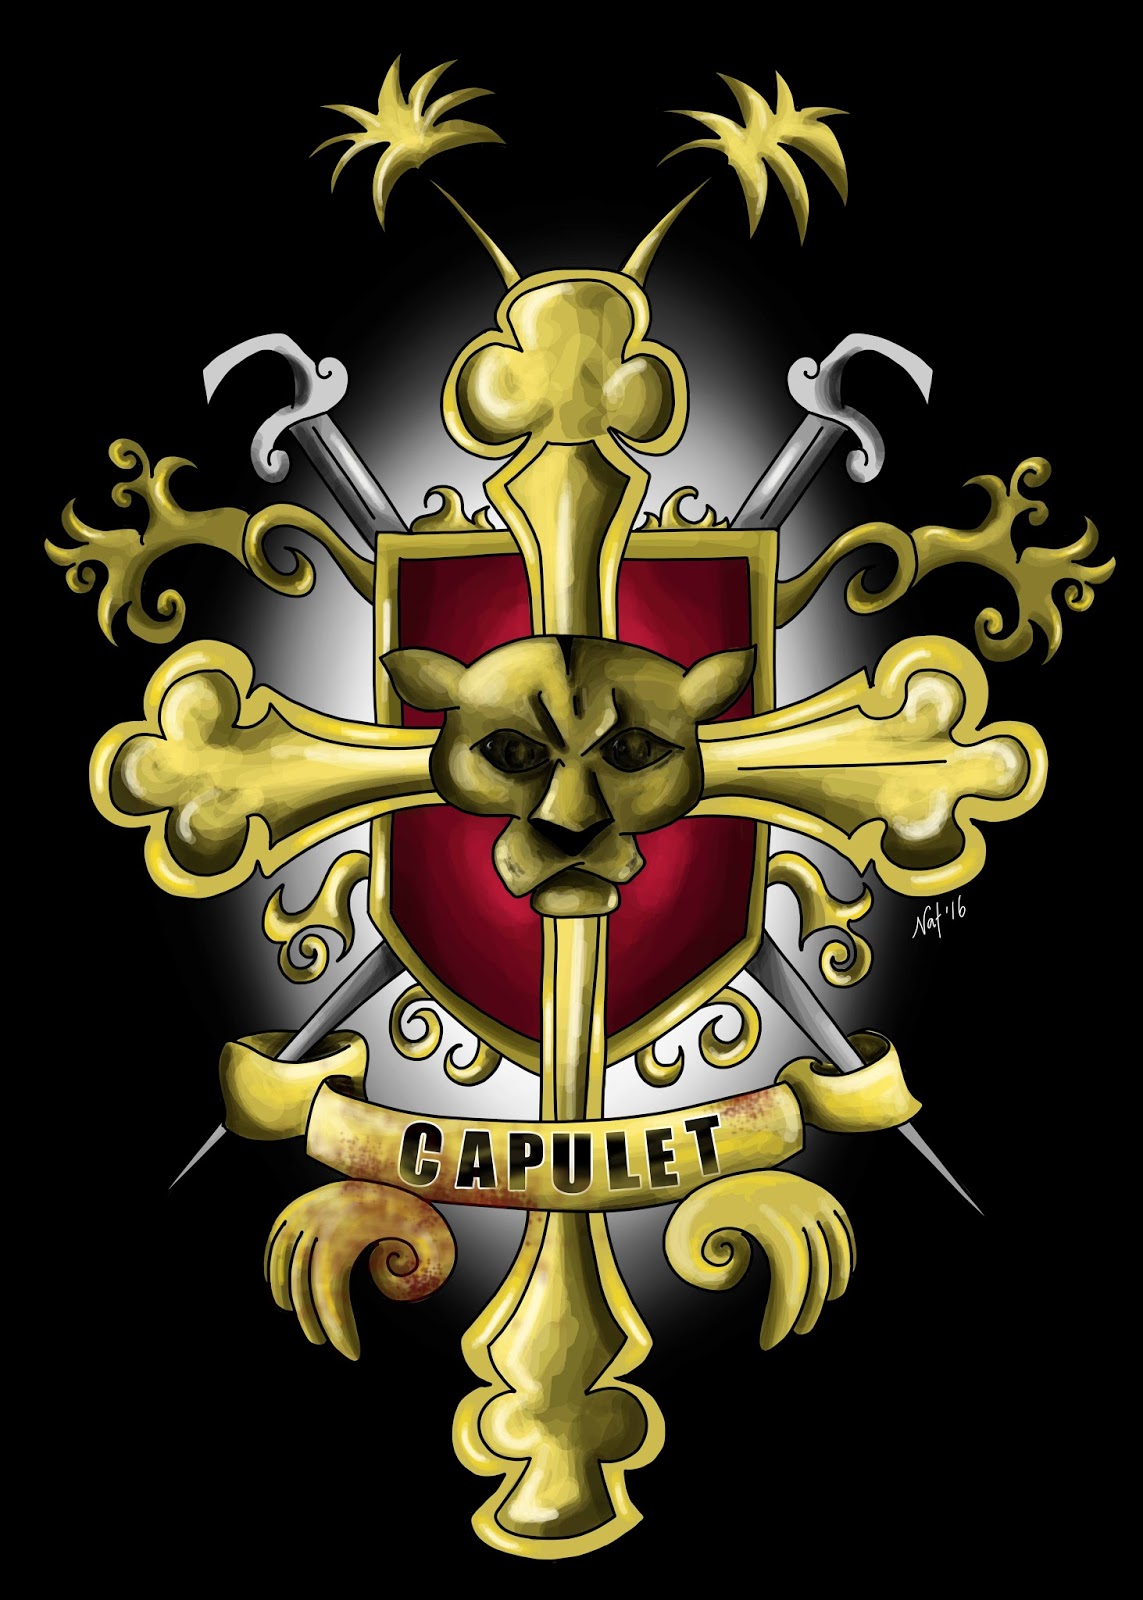 Capulet coat of arms